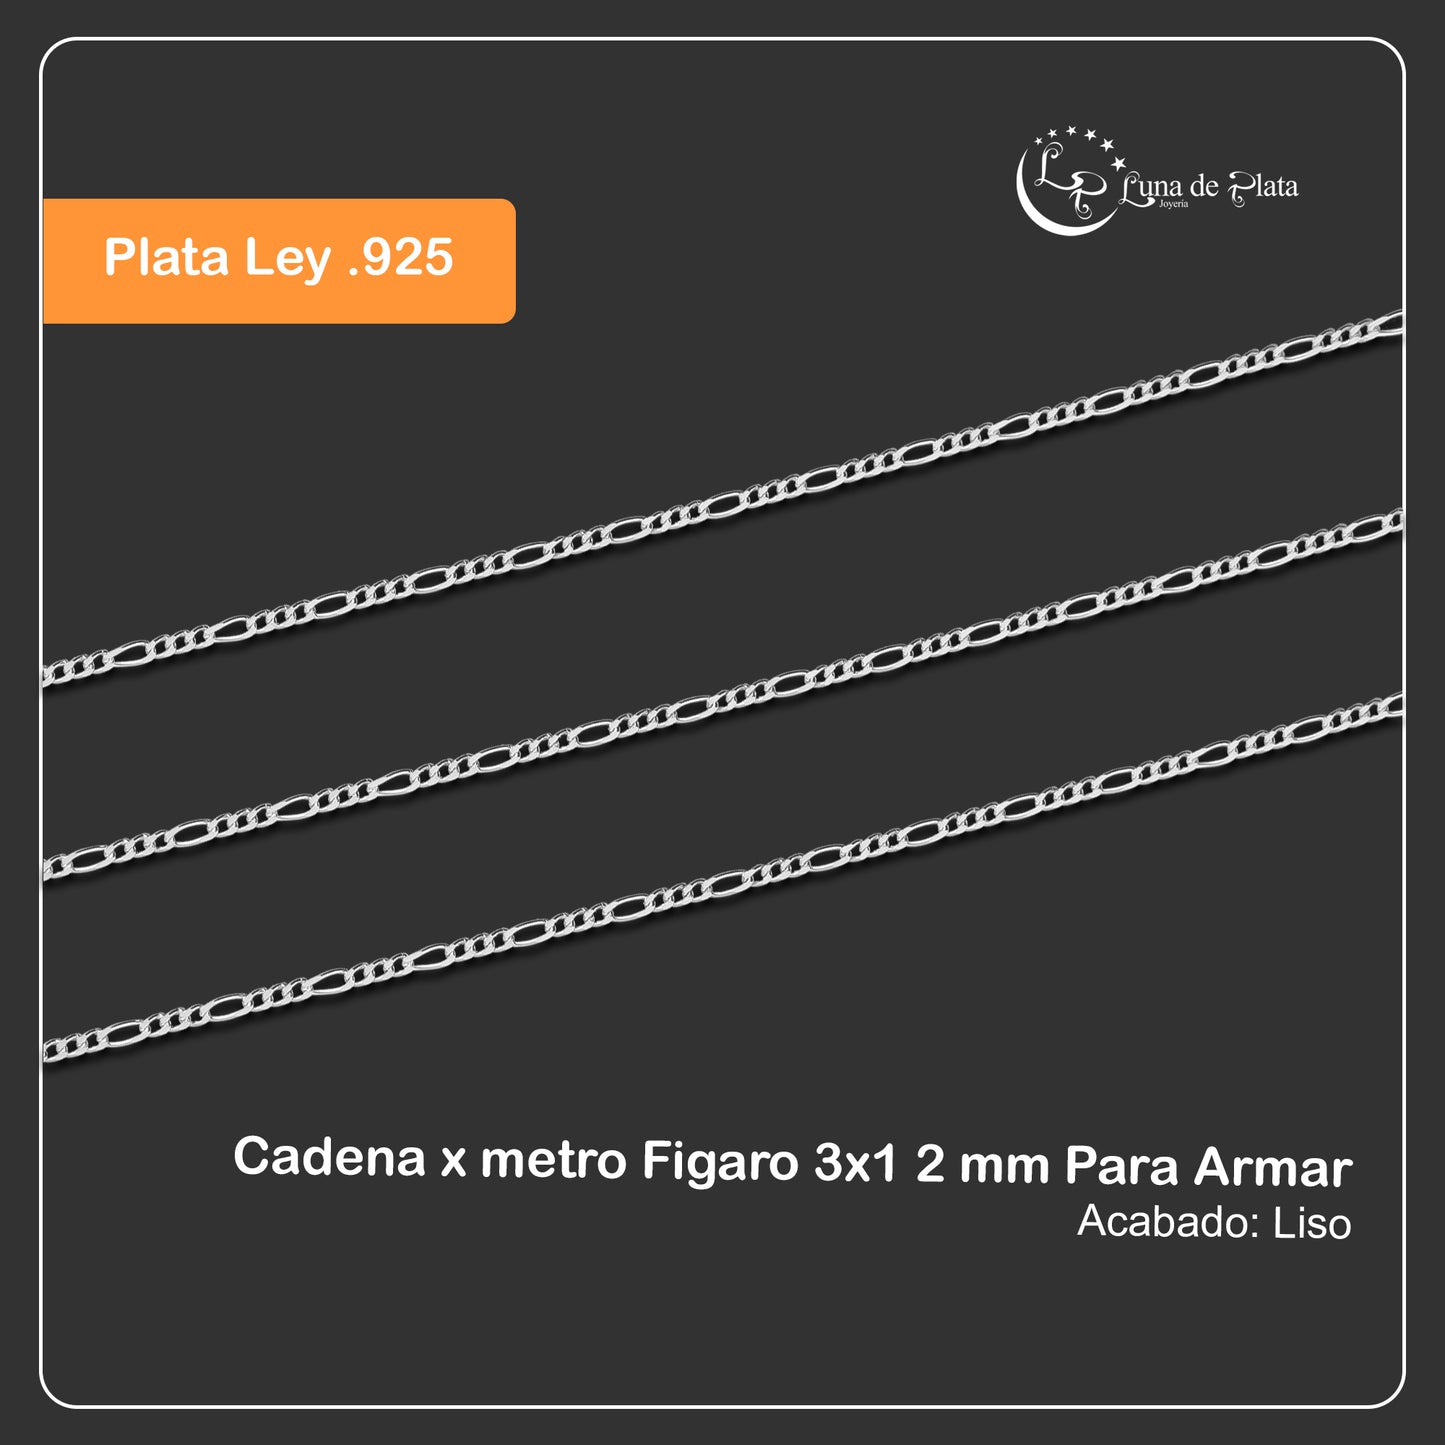 LPCAD007 Cadena x metro Figaro 3x1 2 mm Para Armar Plata .925 2055447413